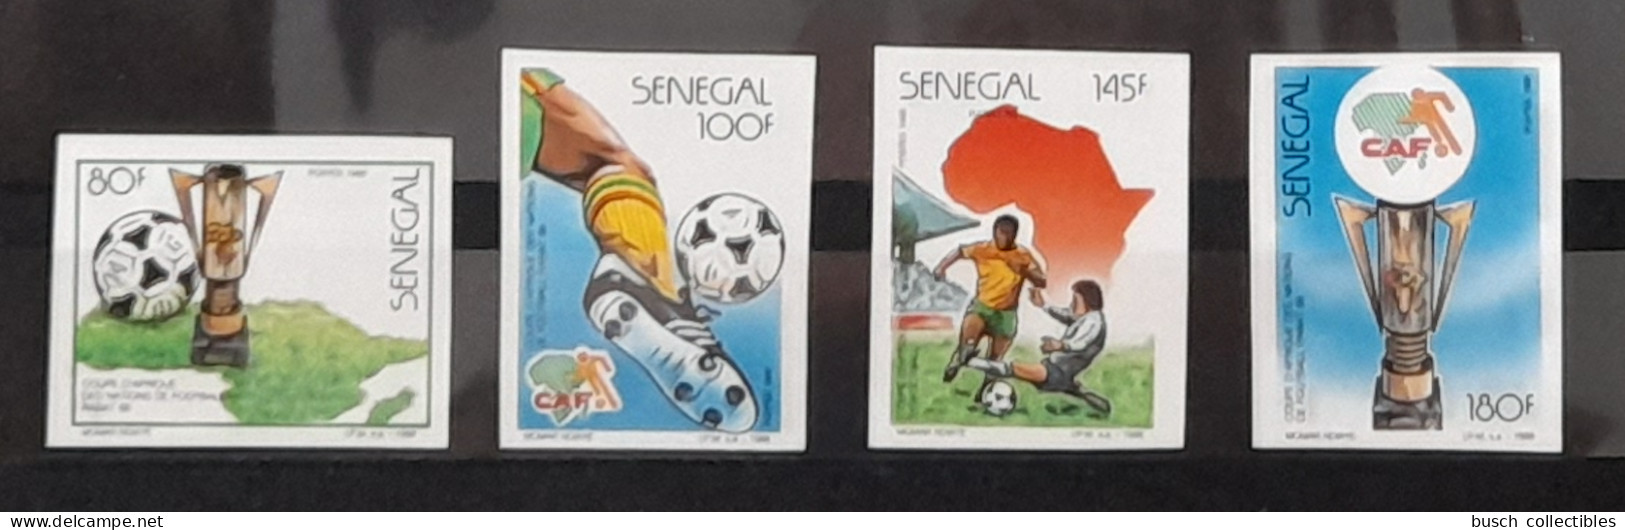 Sénégal 1988 Mi. 973 - 976 IMPERF ND Football Fußball Soccer CAF CAN Coupe D'Afrique Des Nations Rabat Maroc - Afrika Cup